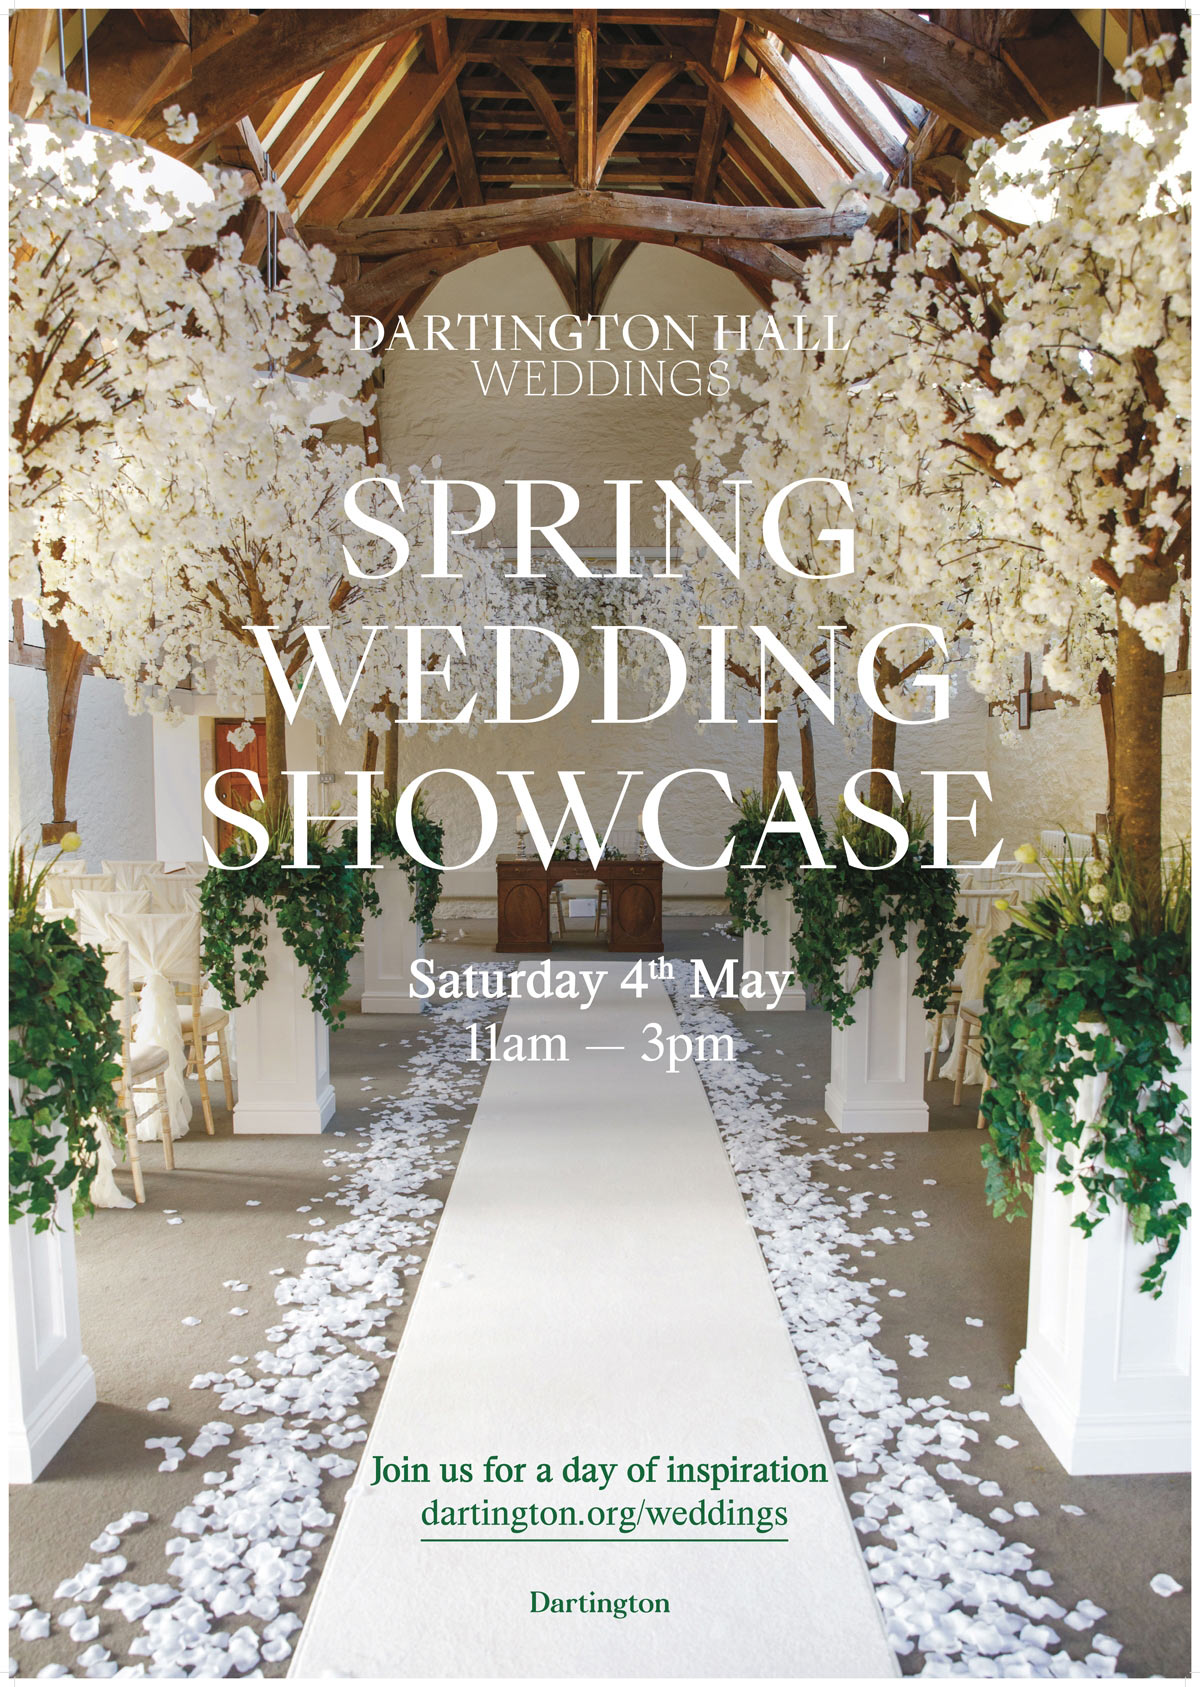 Dartington Hall Spring Wedding Showcase 